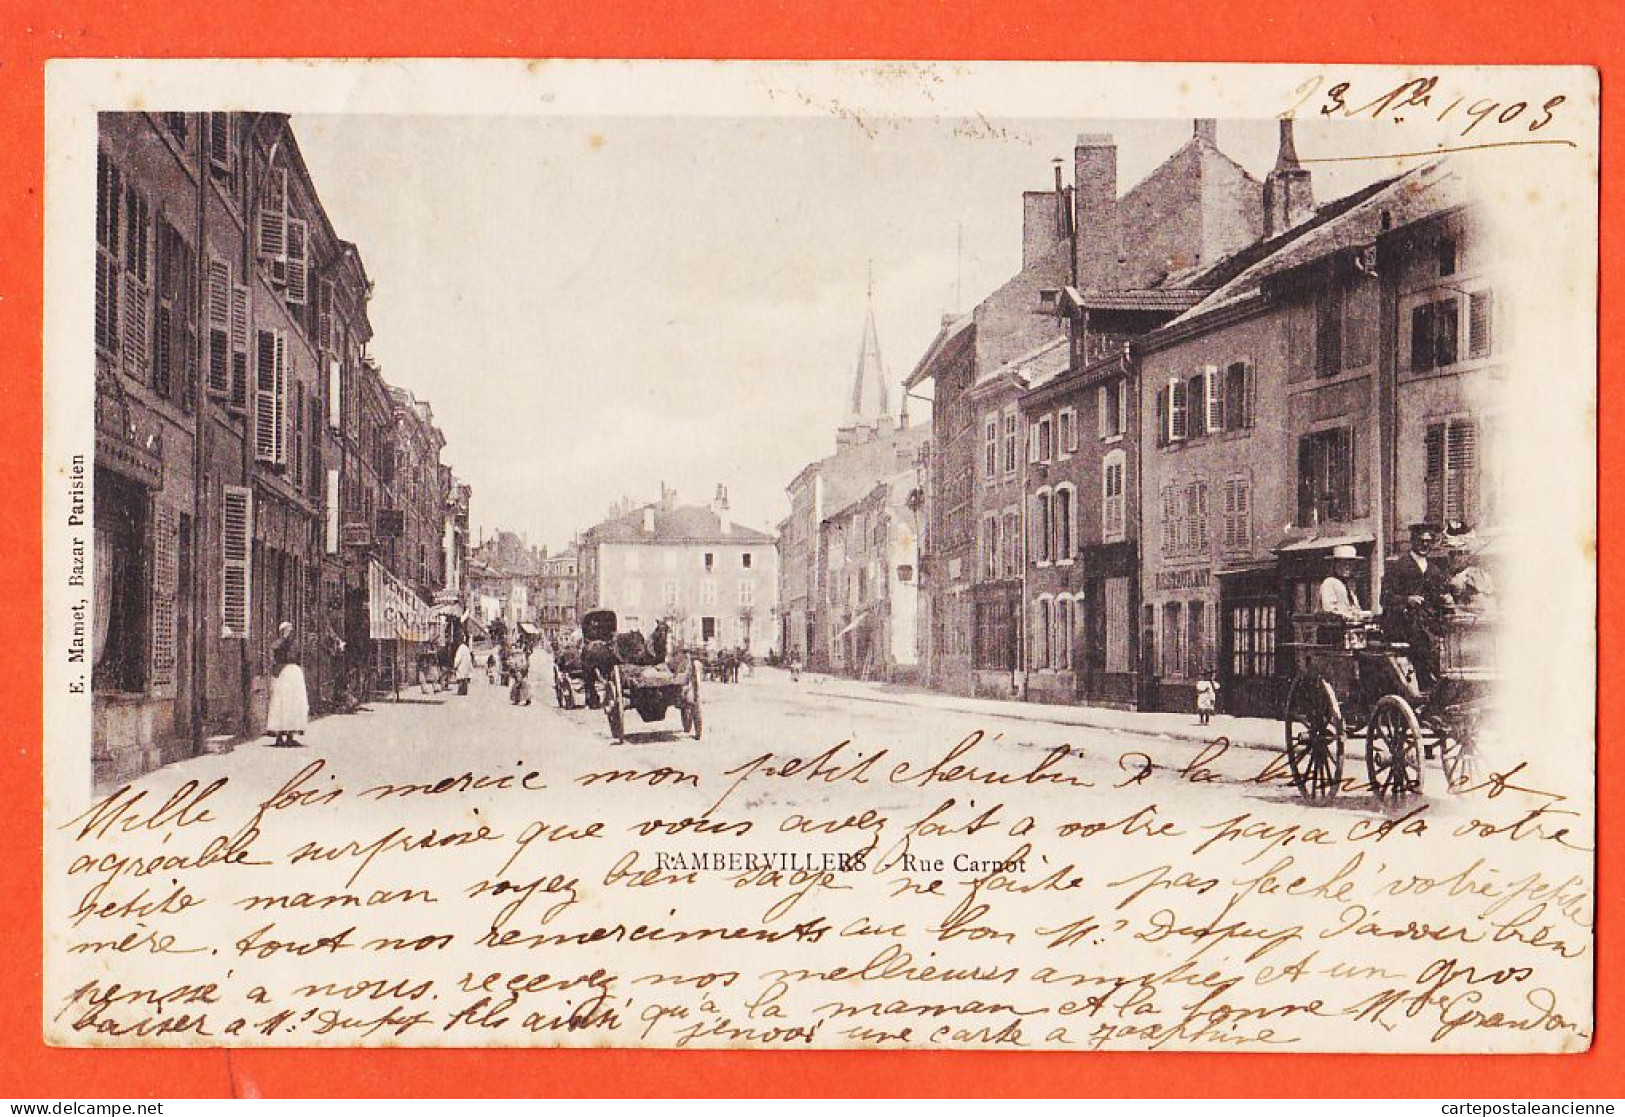 05799 / ⭐ ♥️ RAMBERVILLERS 88-Vosges Attelage Rue CARNOT 1903 à DUPUY Rue Inquisition Toulouse-Bazar Parisien MAMET - Rambervillers